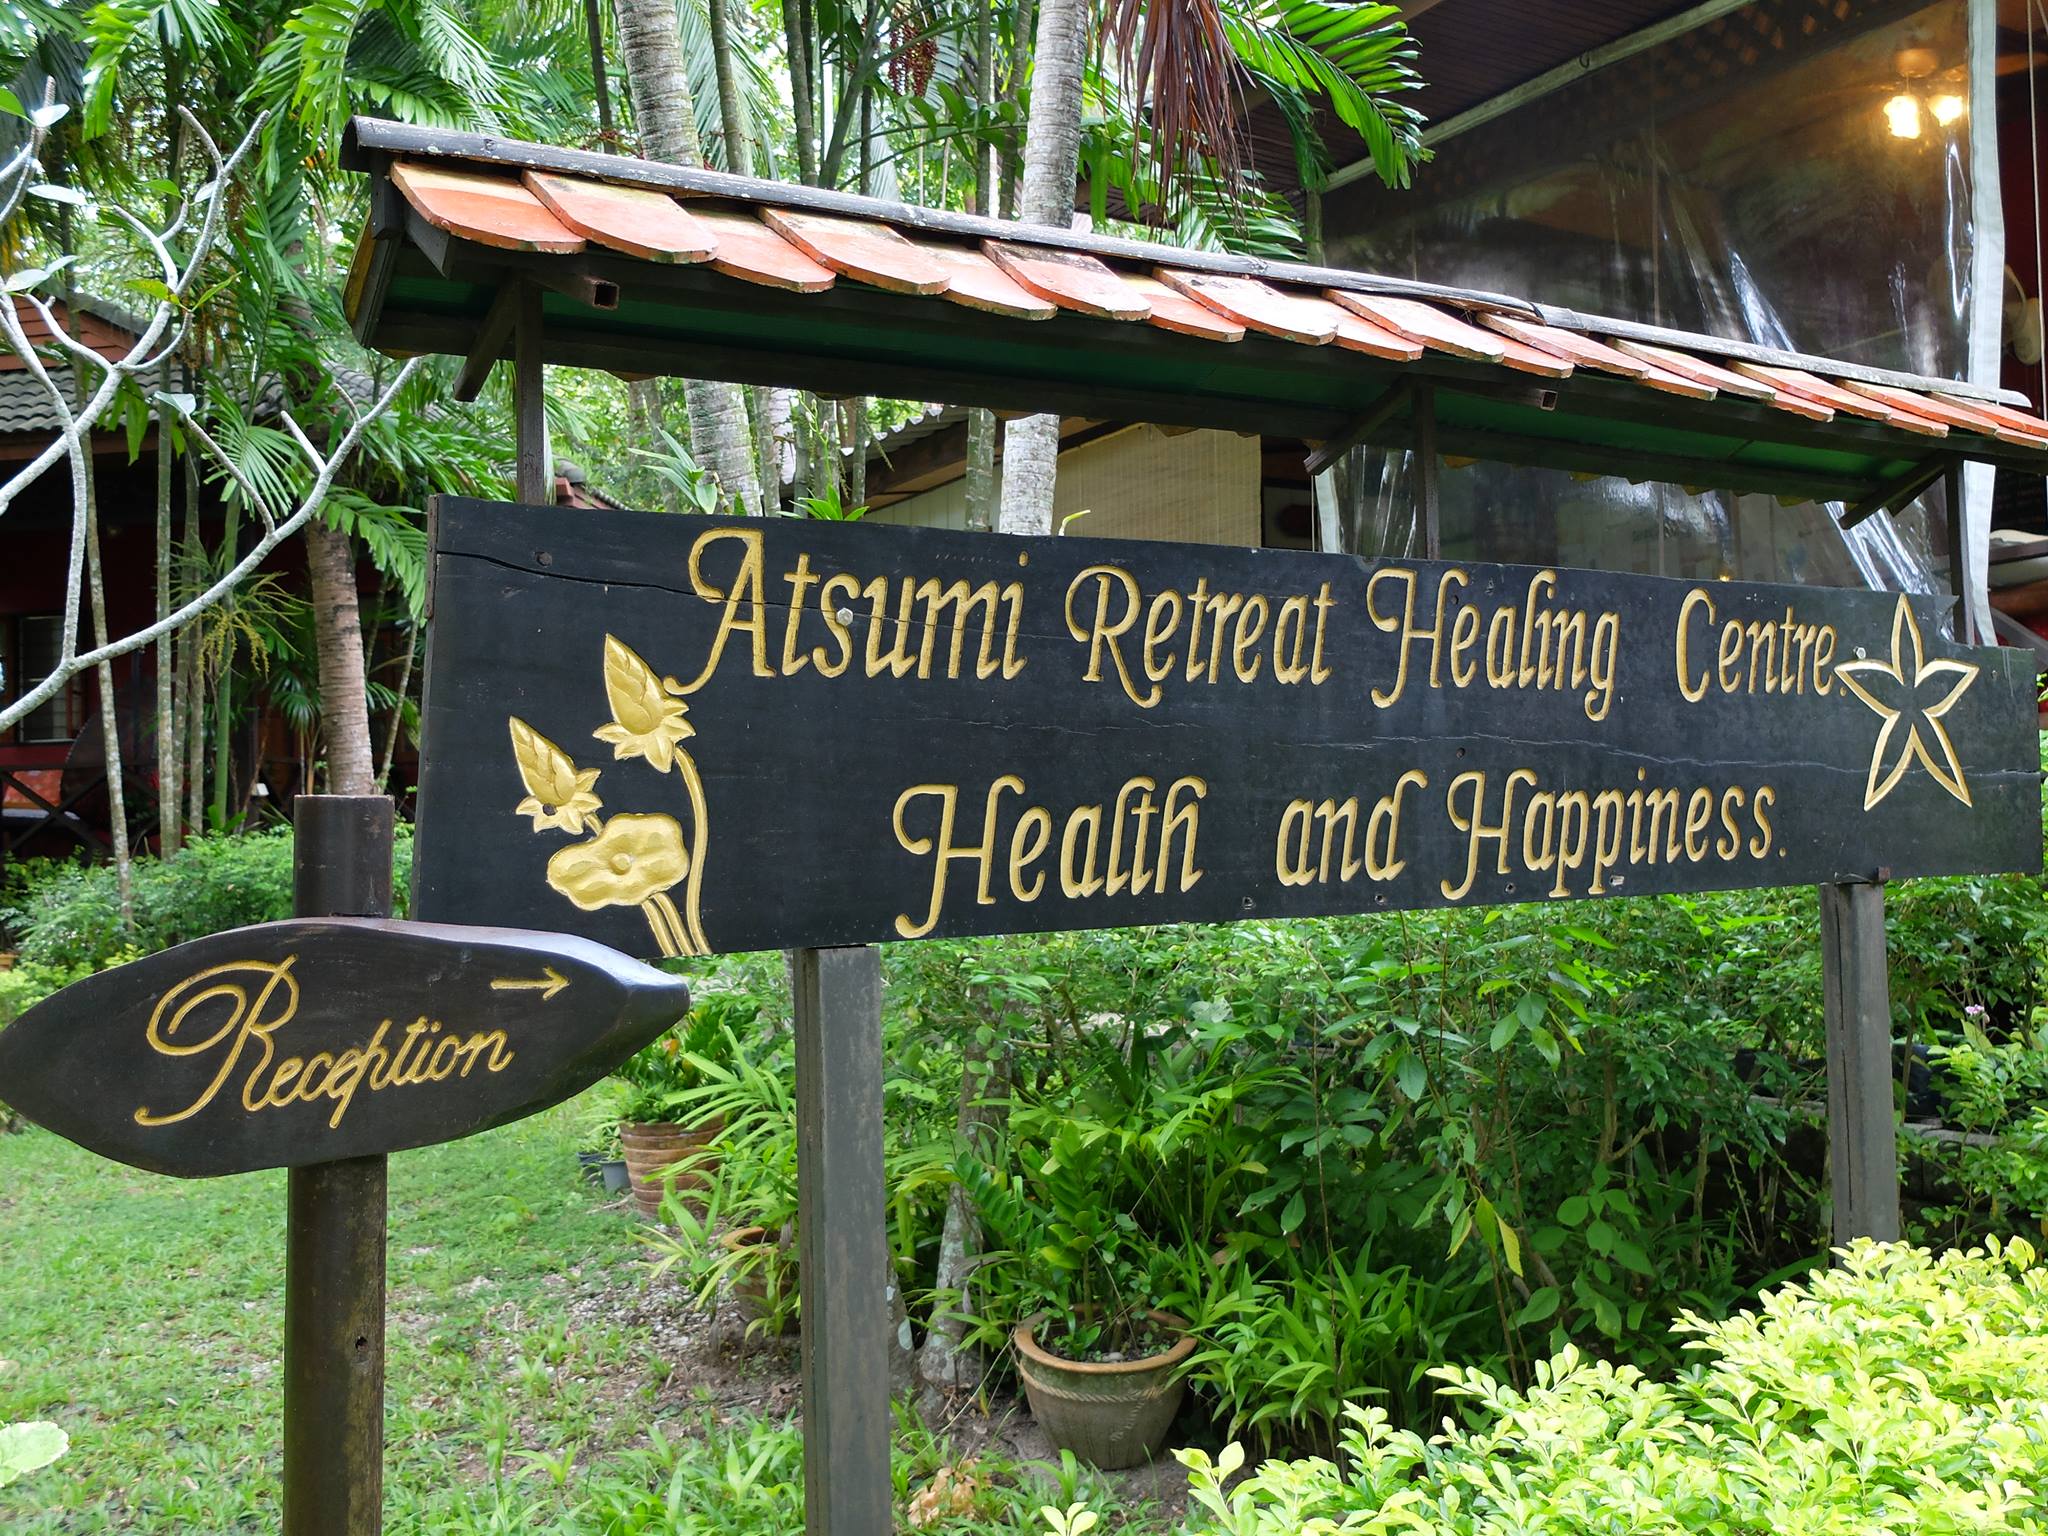 Astumi Retreat Healing Center Image